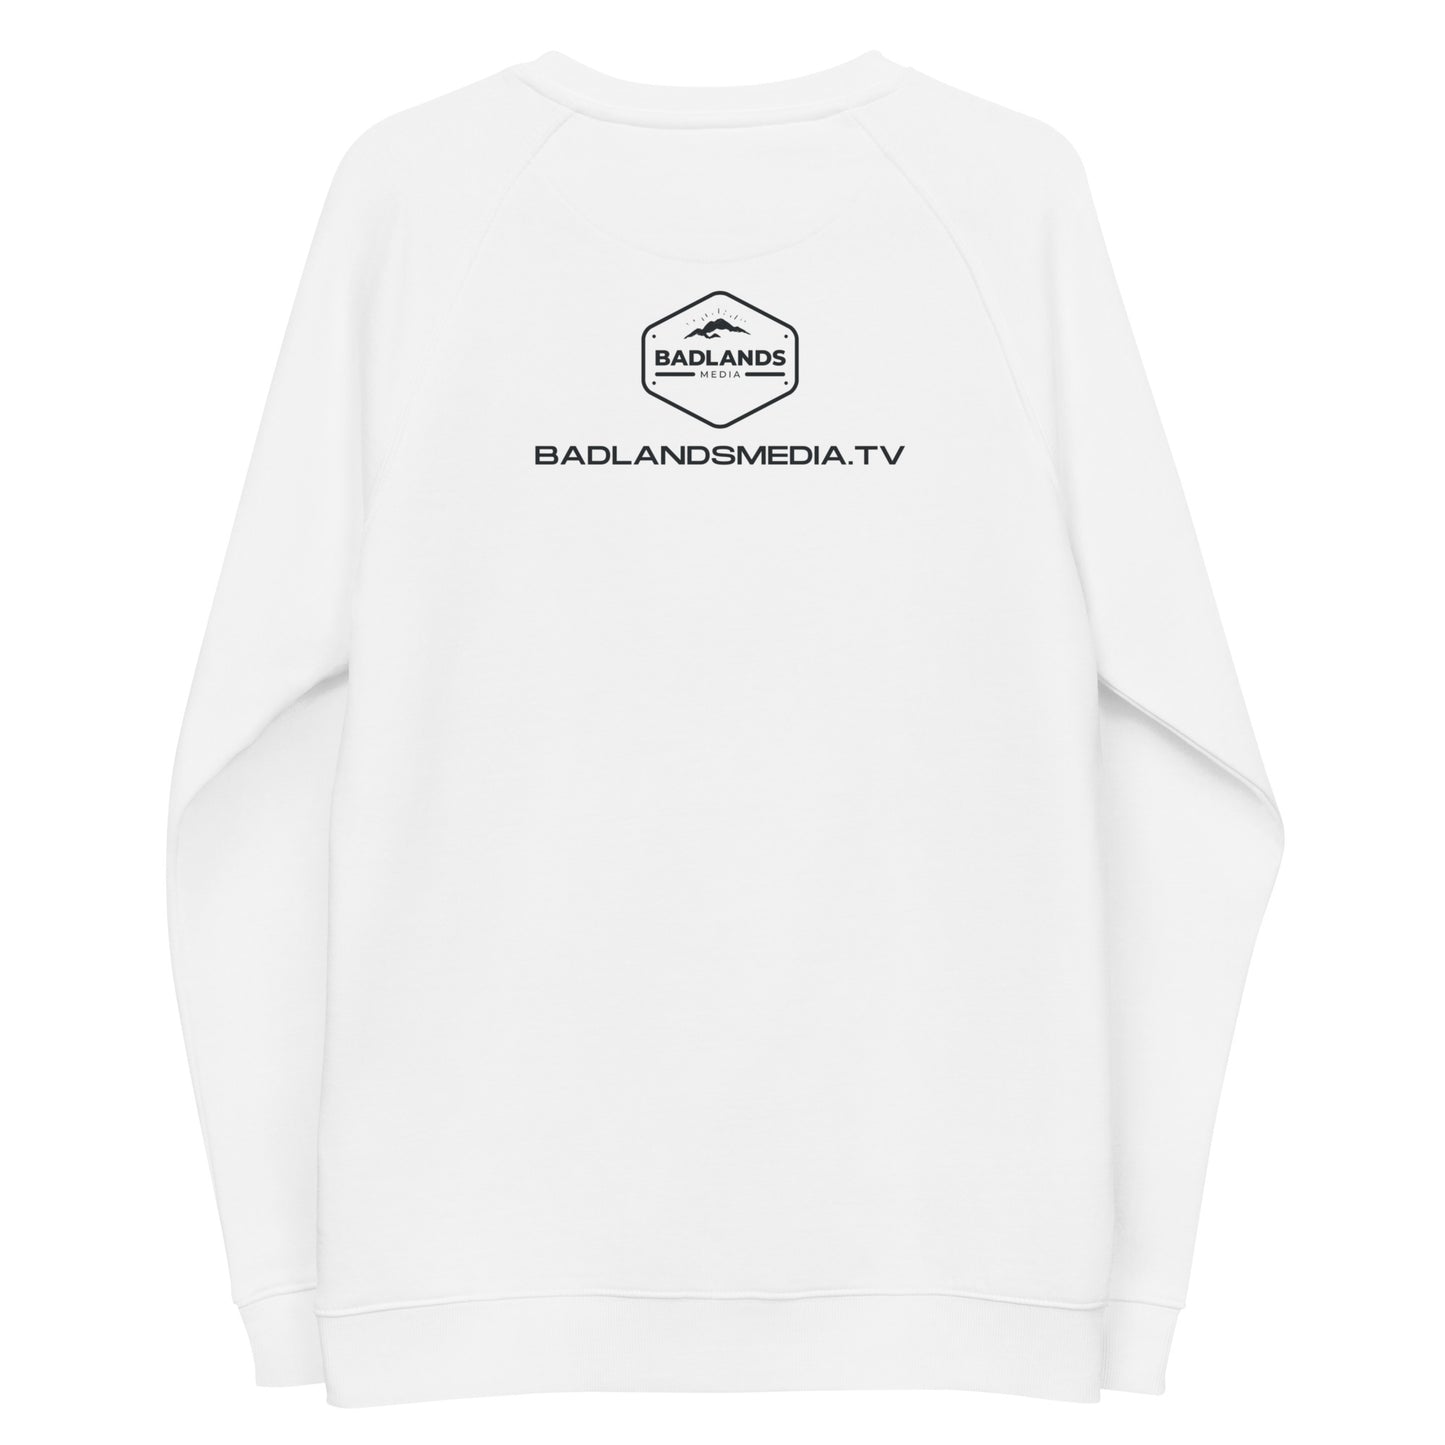 Eye of the Storm Unisex organic raglan sweatshirt (dark logo)